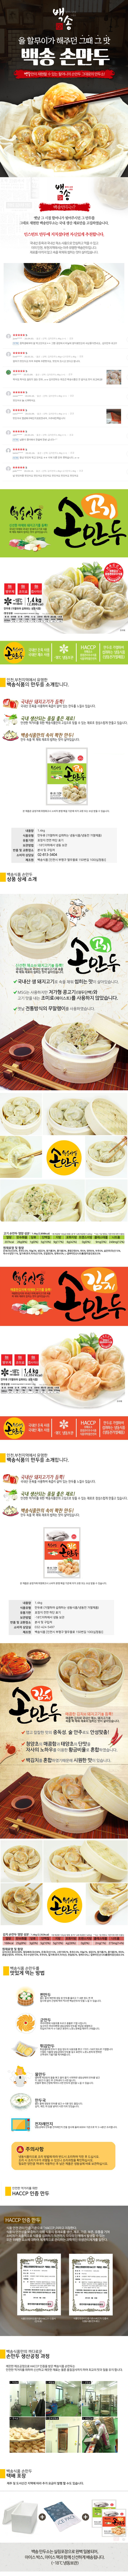 baeksonggoki+kimchi_page_1.4kg.jpg